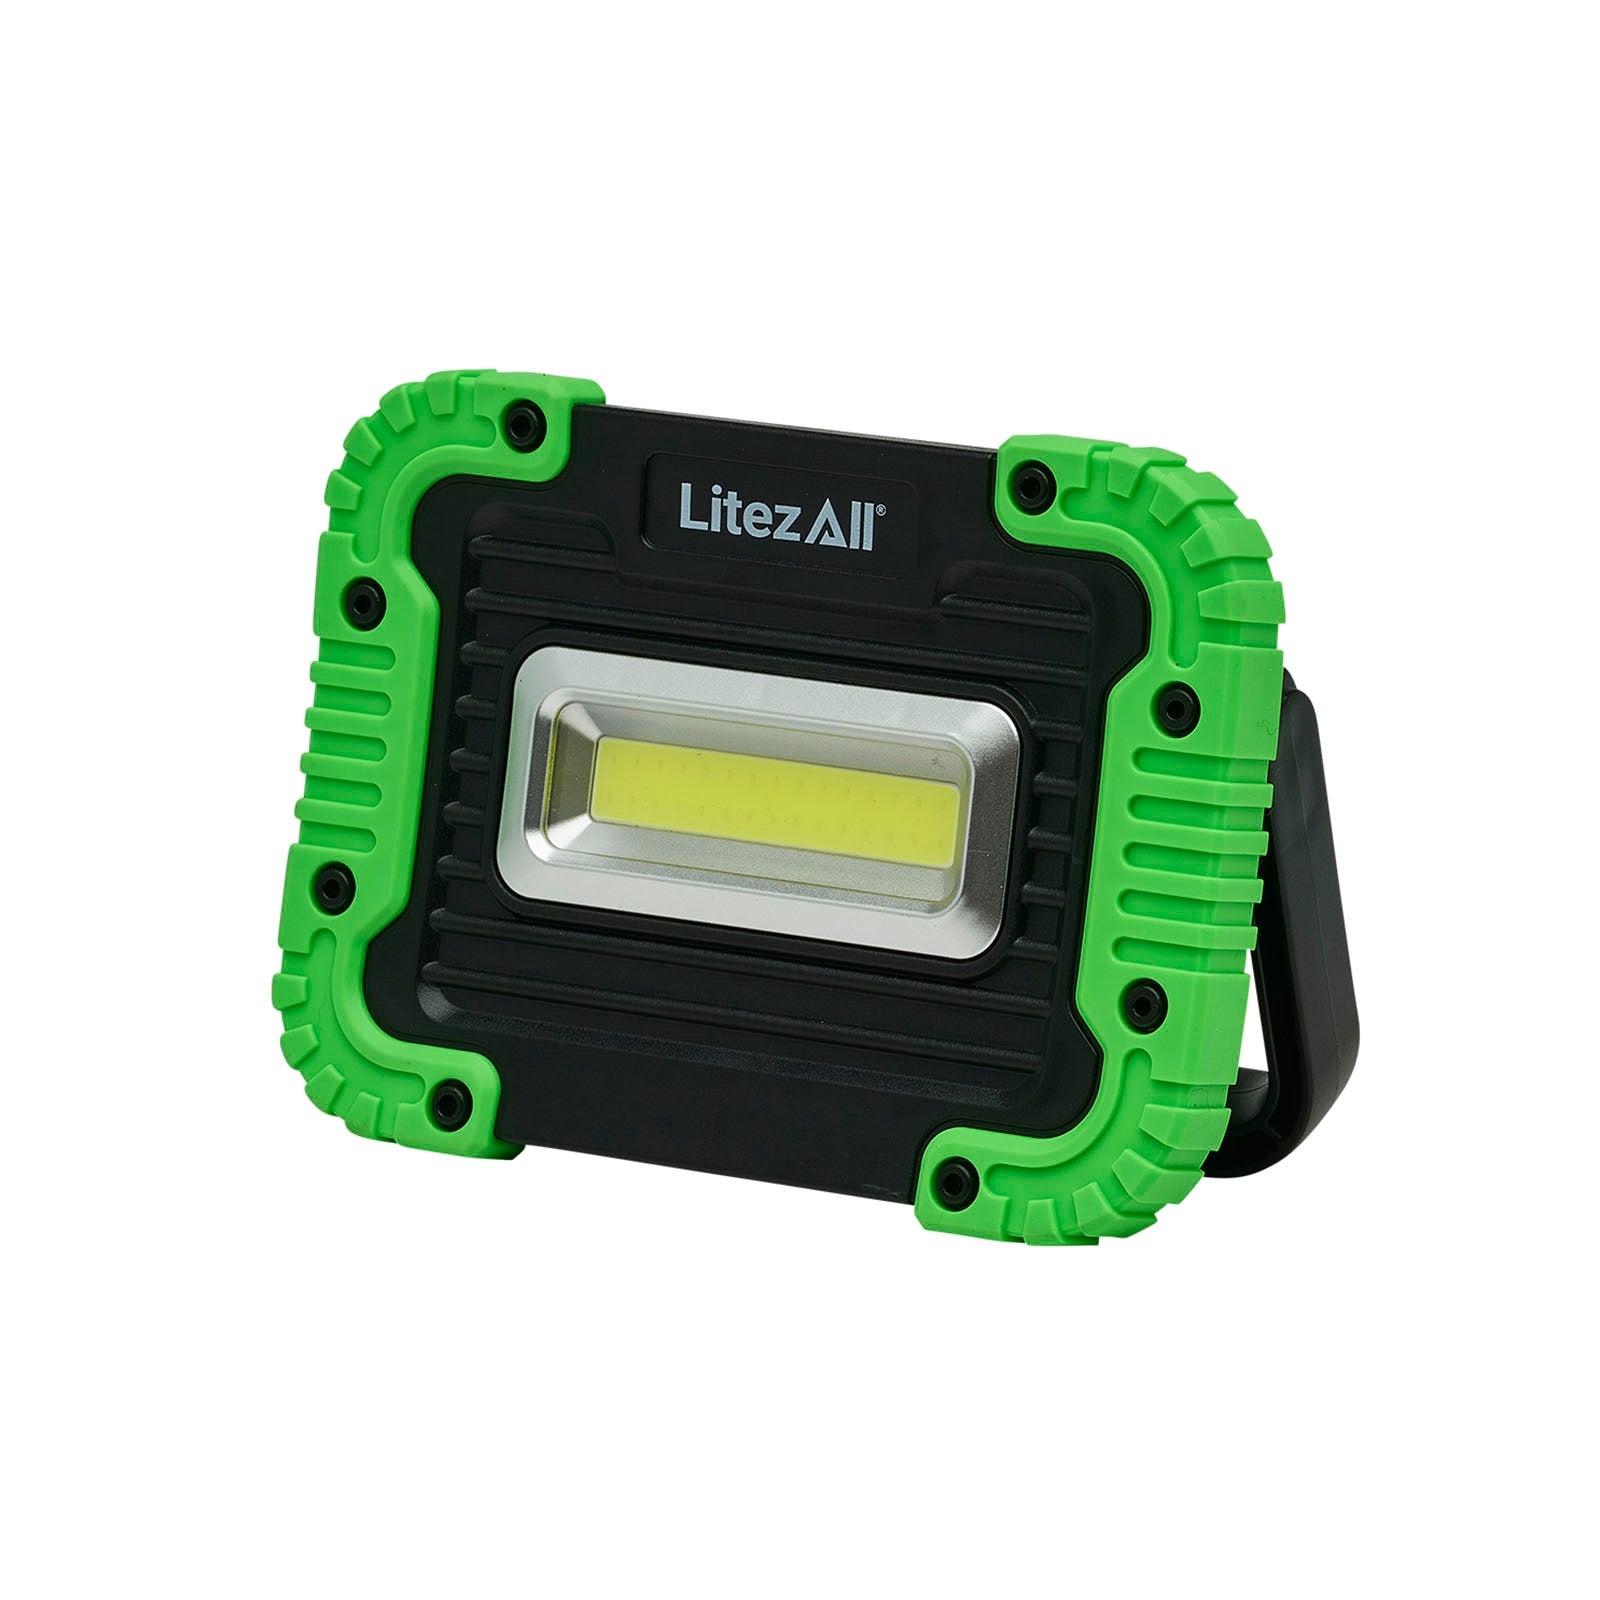 LitezAll 1000 Lumen Compact Kickstand Work Light - LitezAll - Work Lights - 48